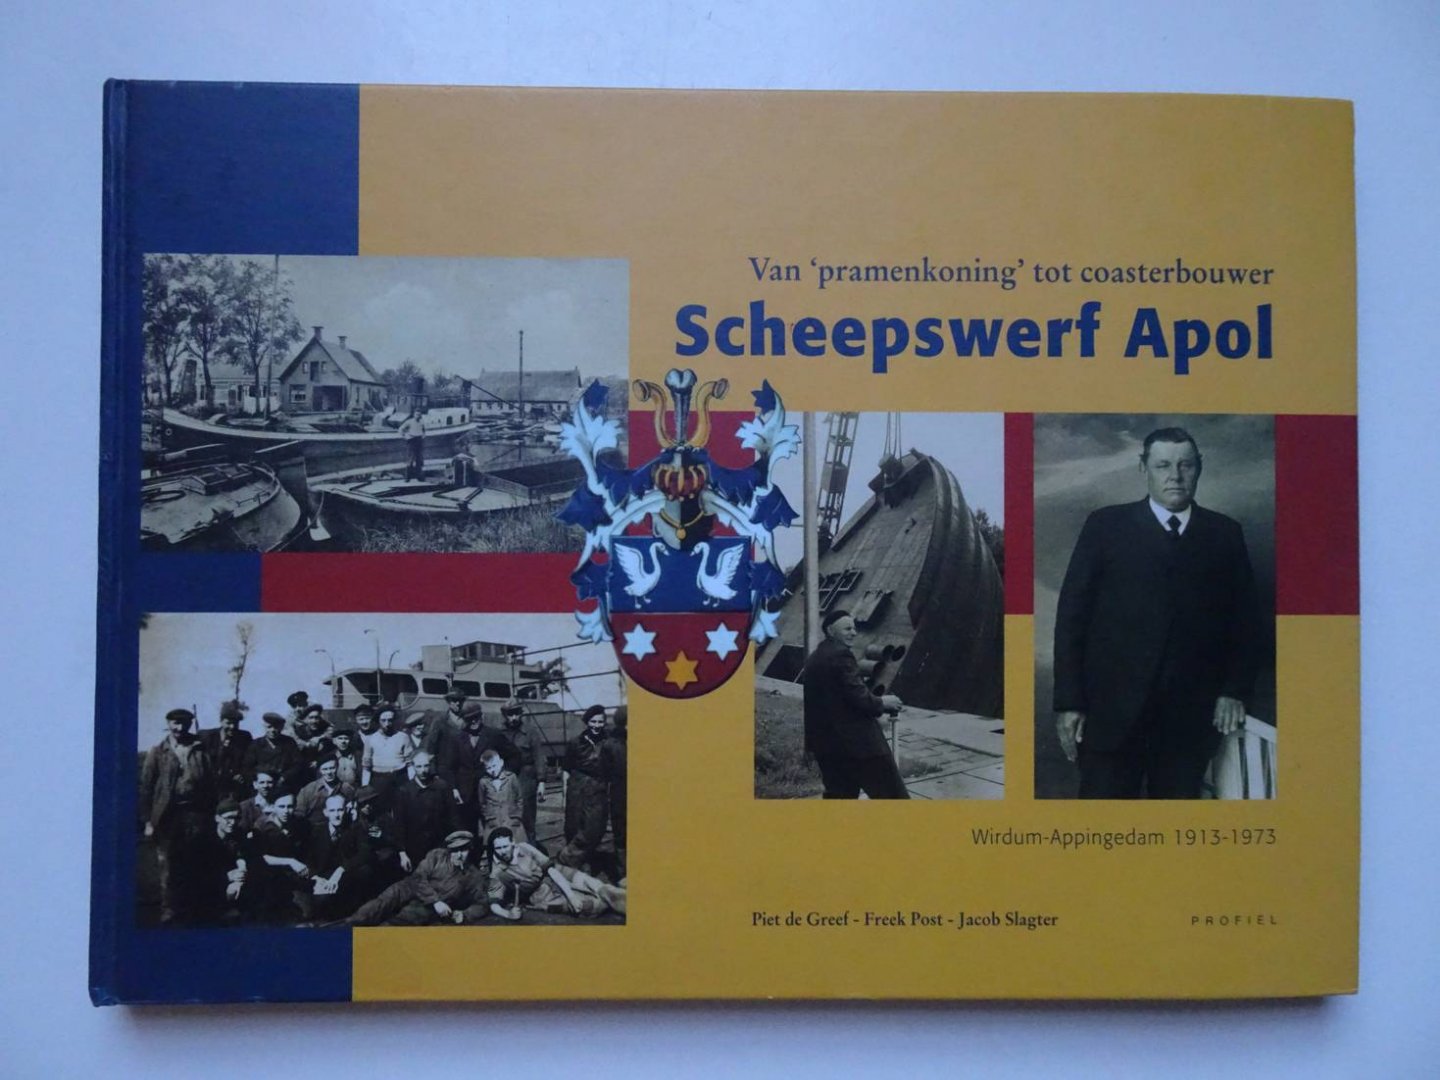 Greef, Piet de, Freek Post & Jacob Slagter. - Van 'pramenkoning" tot coasterbouwer. Scheepswerf Apol, Wirdum-Appingedam 1913-1973.